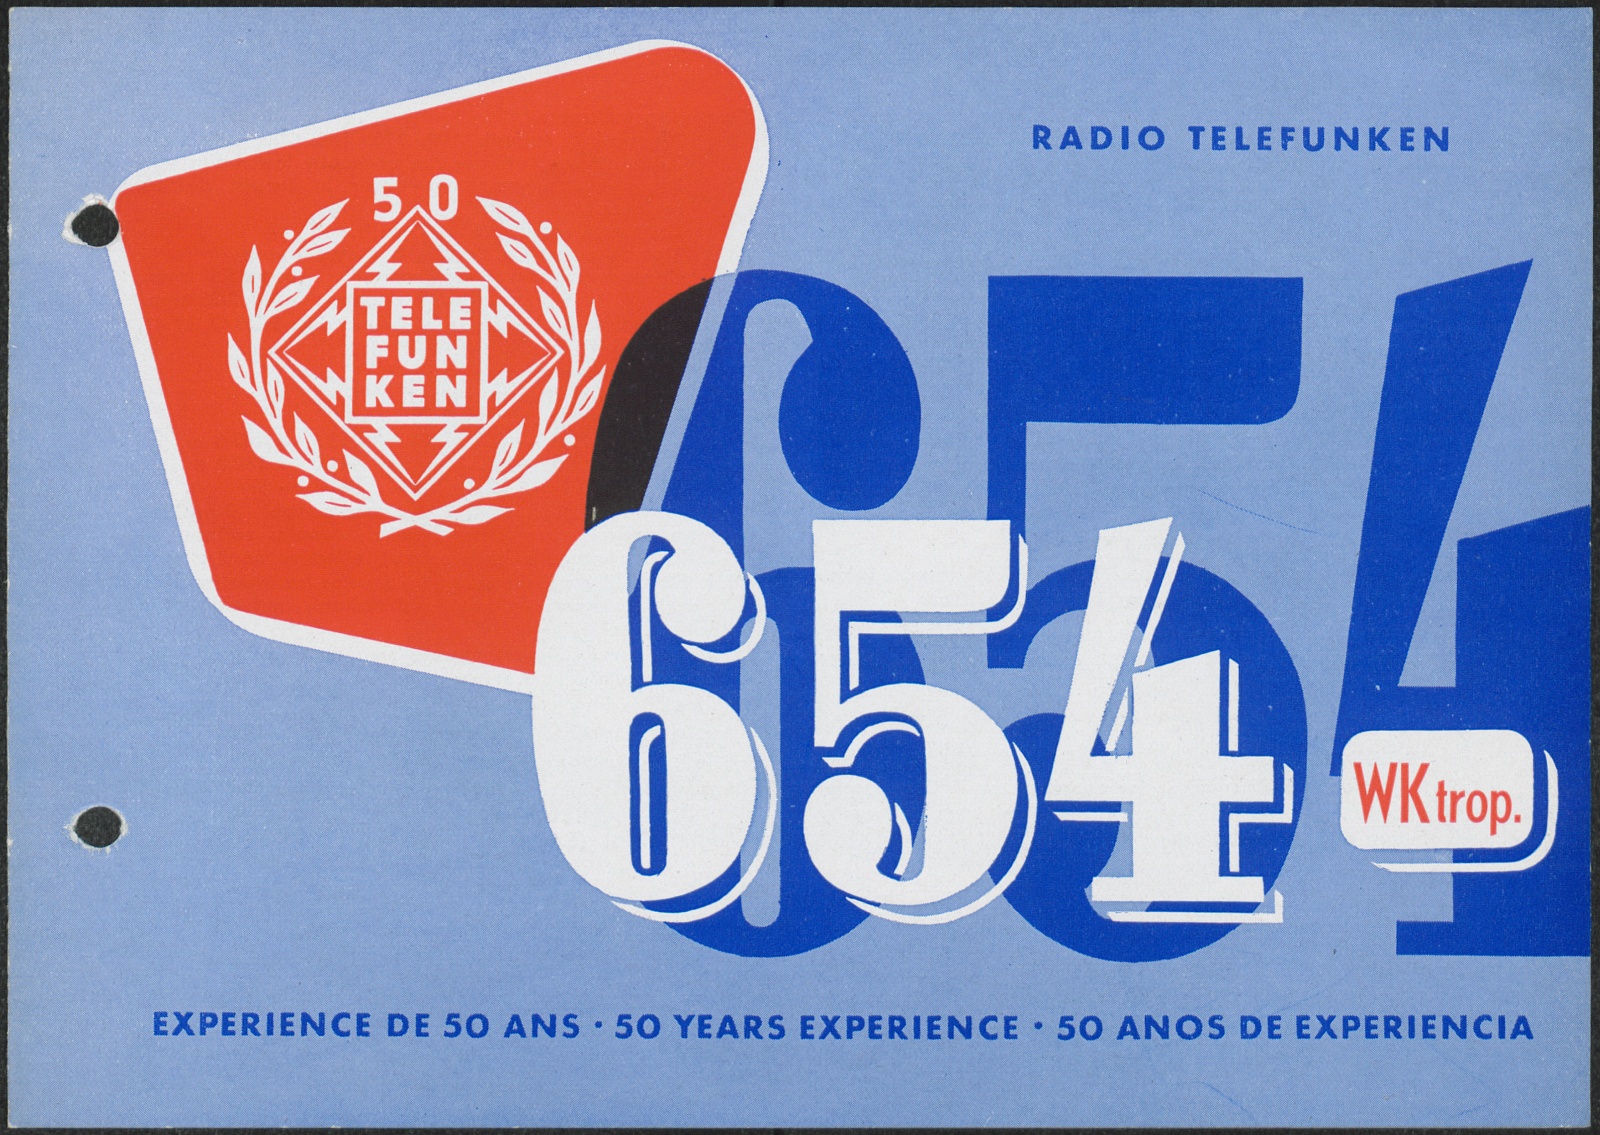 Werbeprospekt: Radio Telefunken 654 WK trop. (Stiftung Deutsches Technikmuseum Berlin CC0)